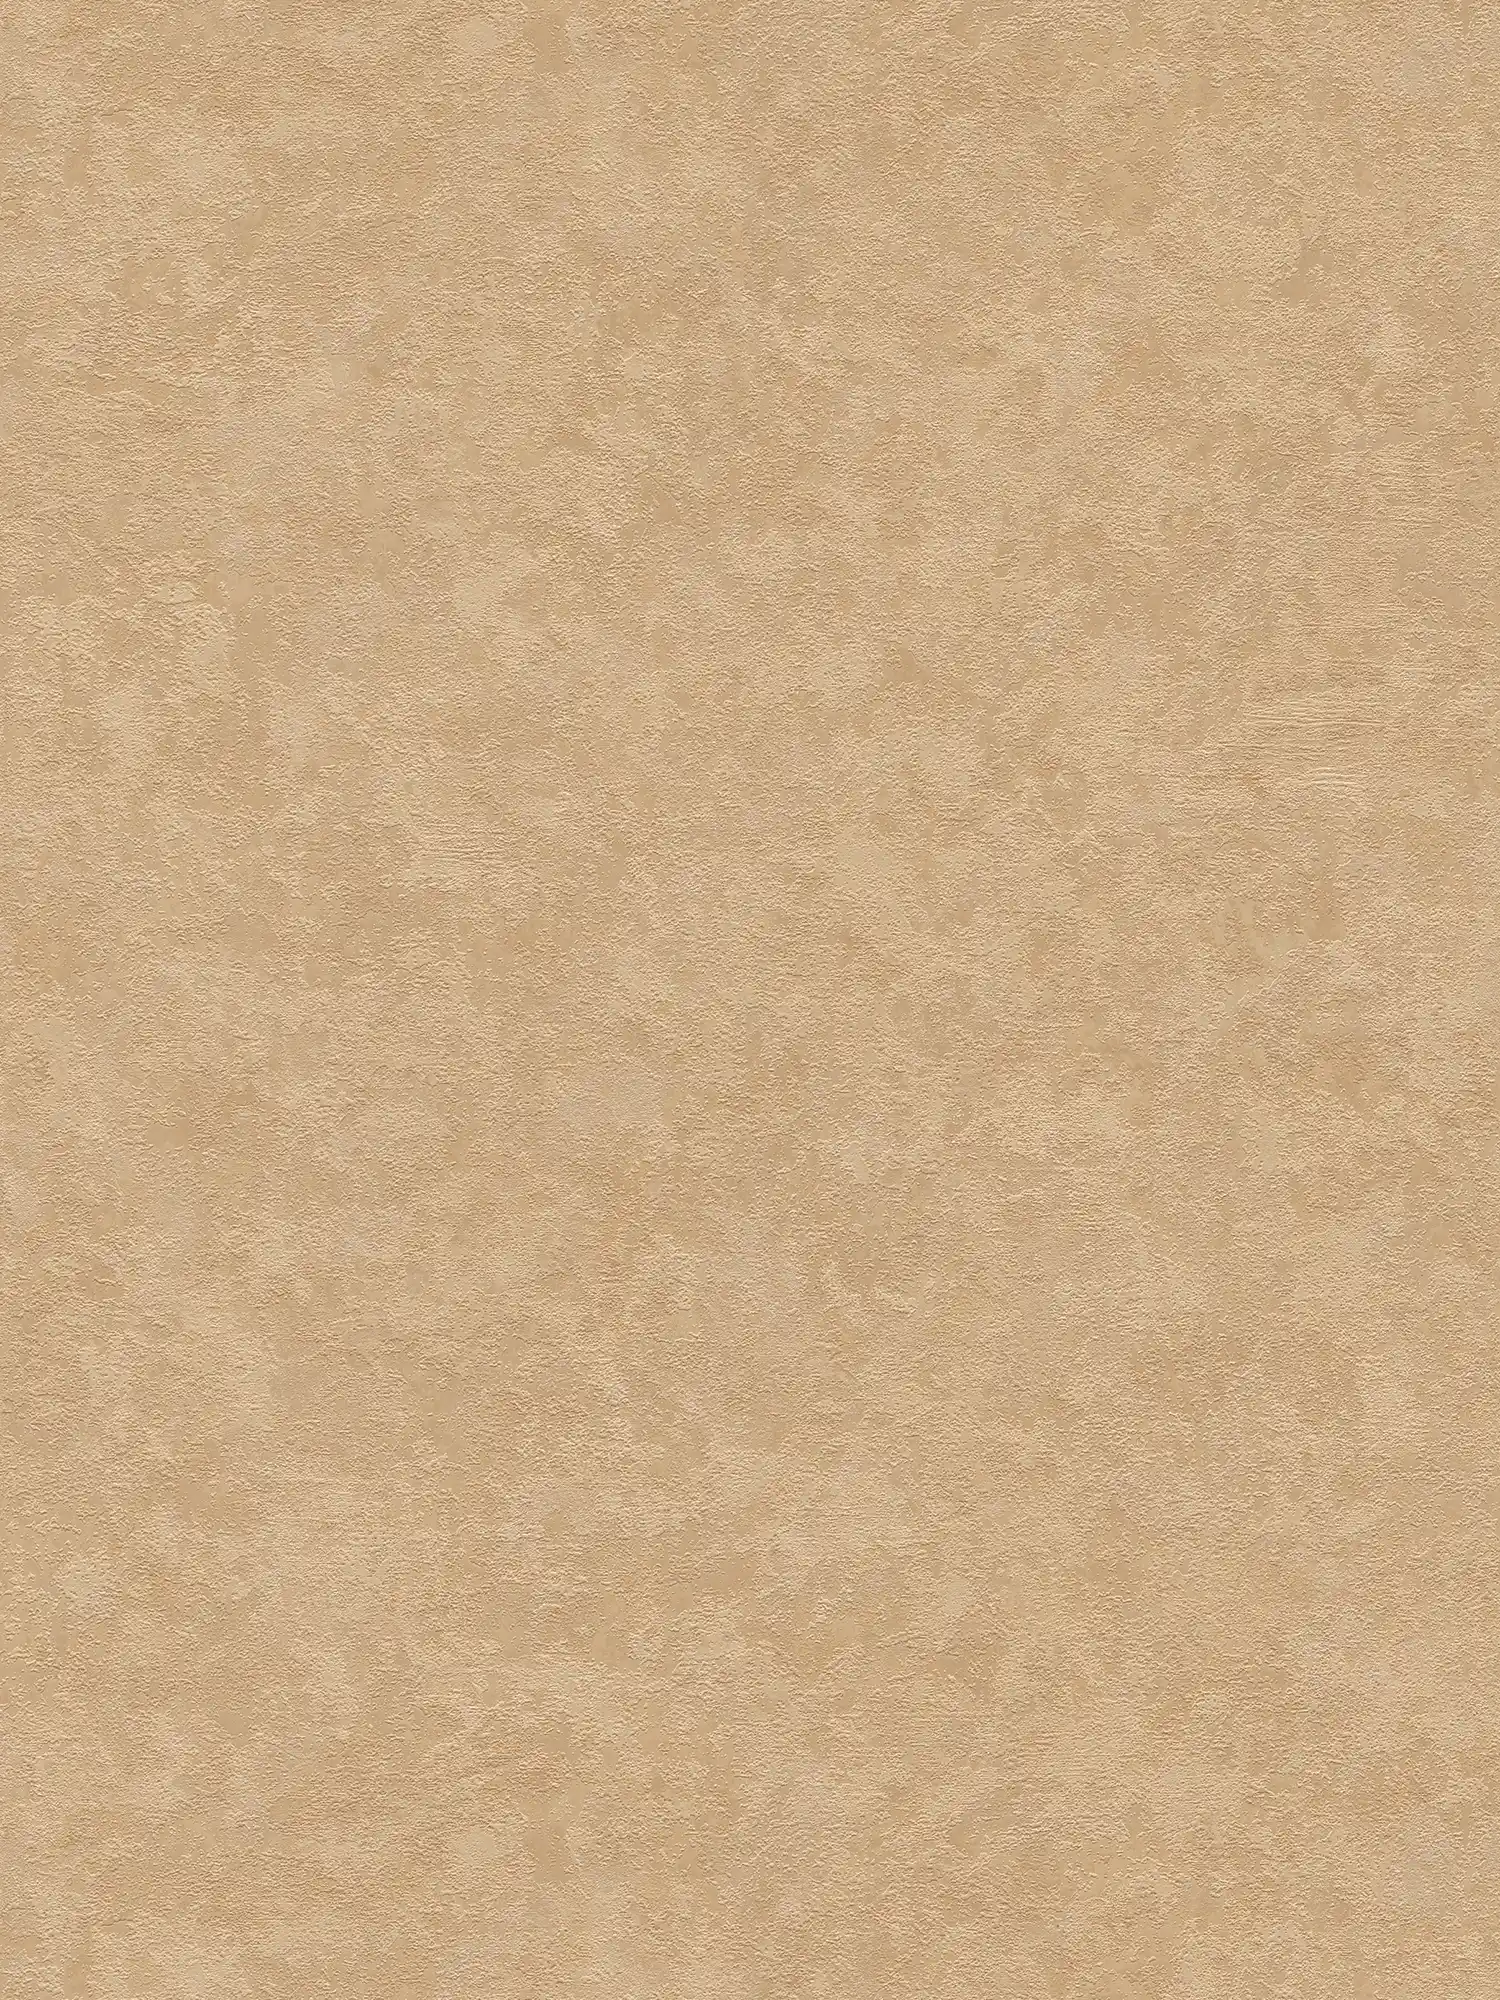 Plain wallpaper with mottled texture pattern - beige, brown
